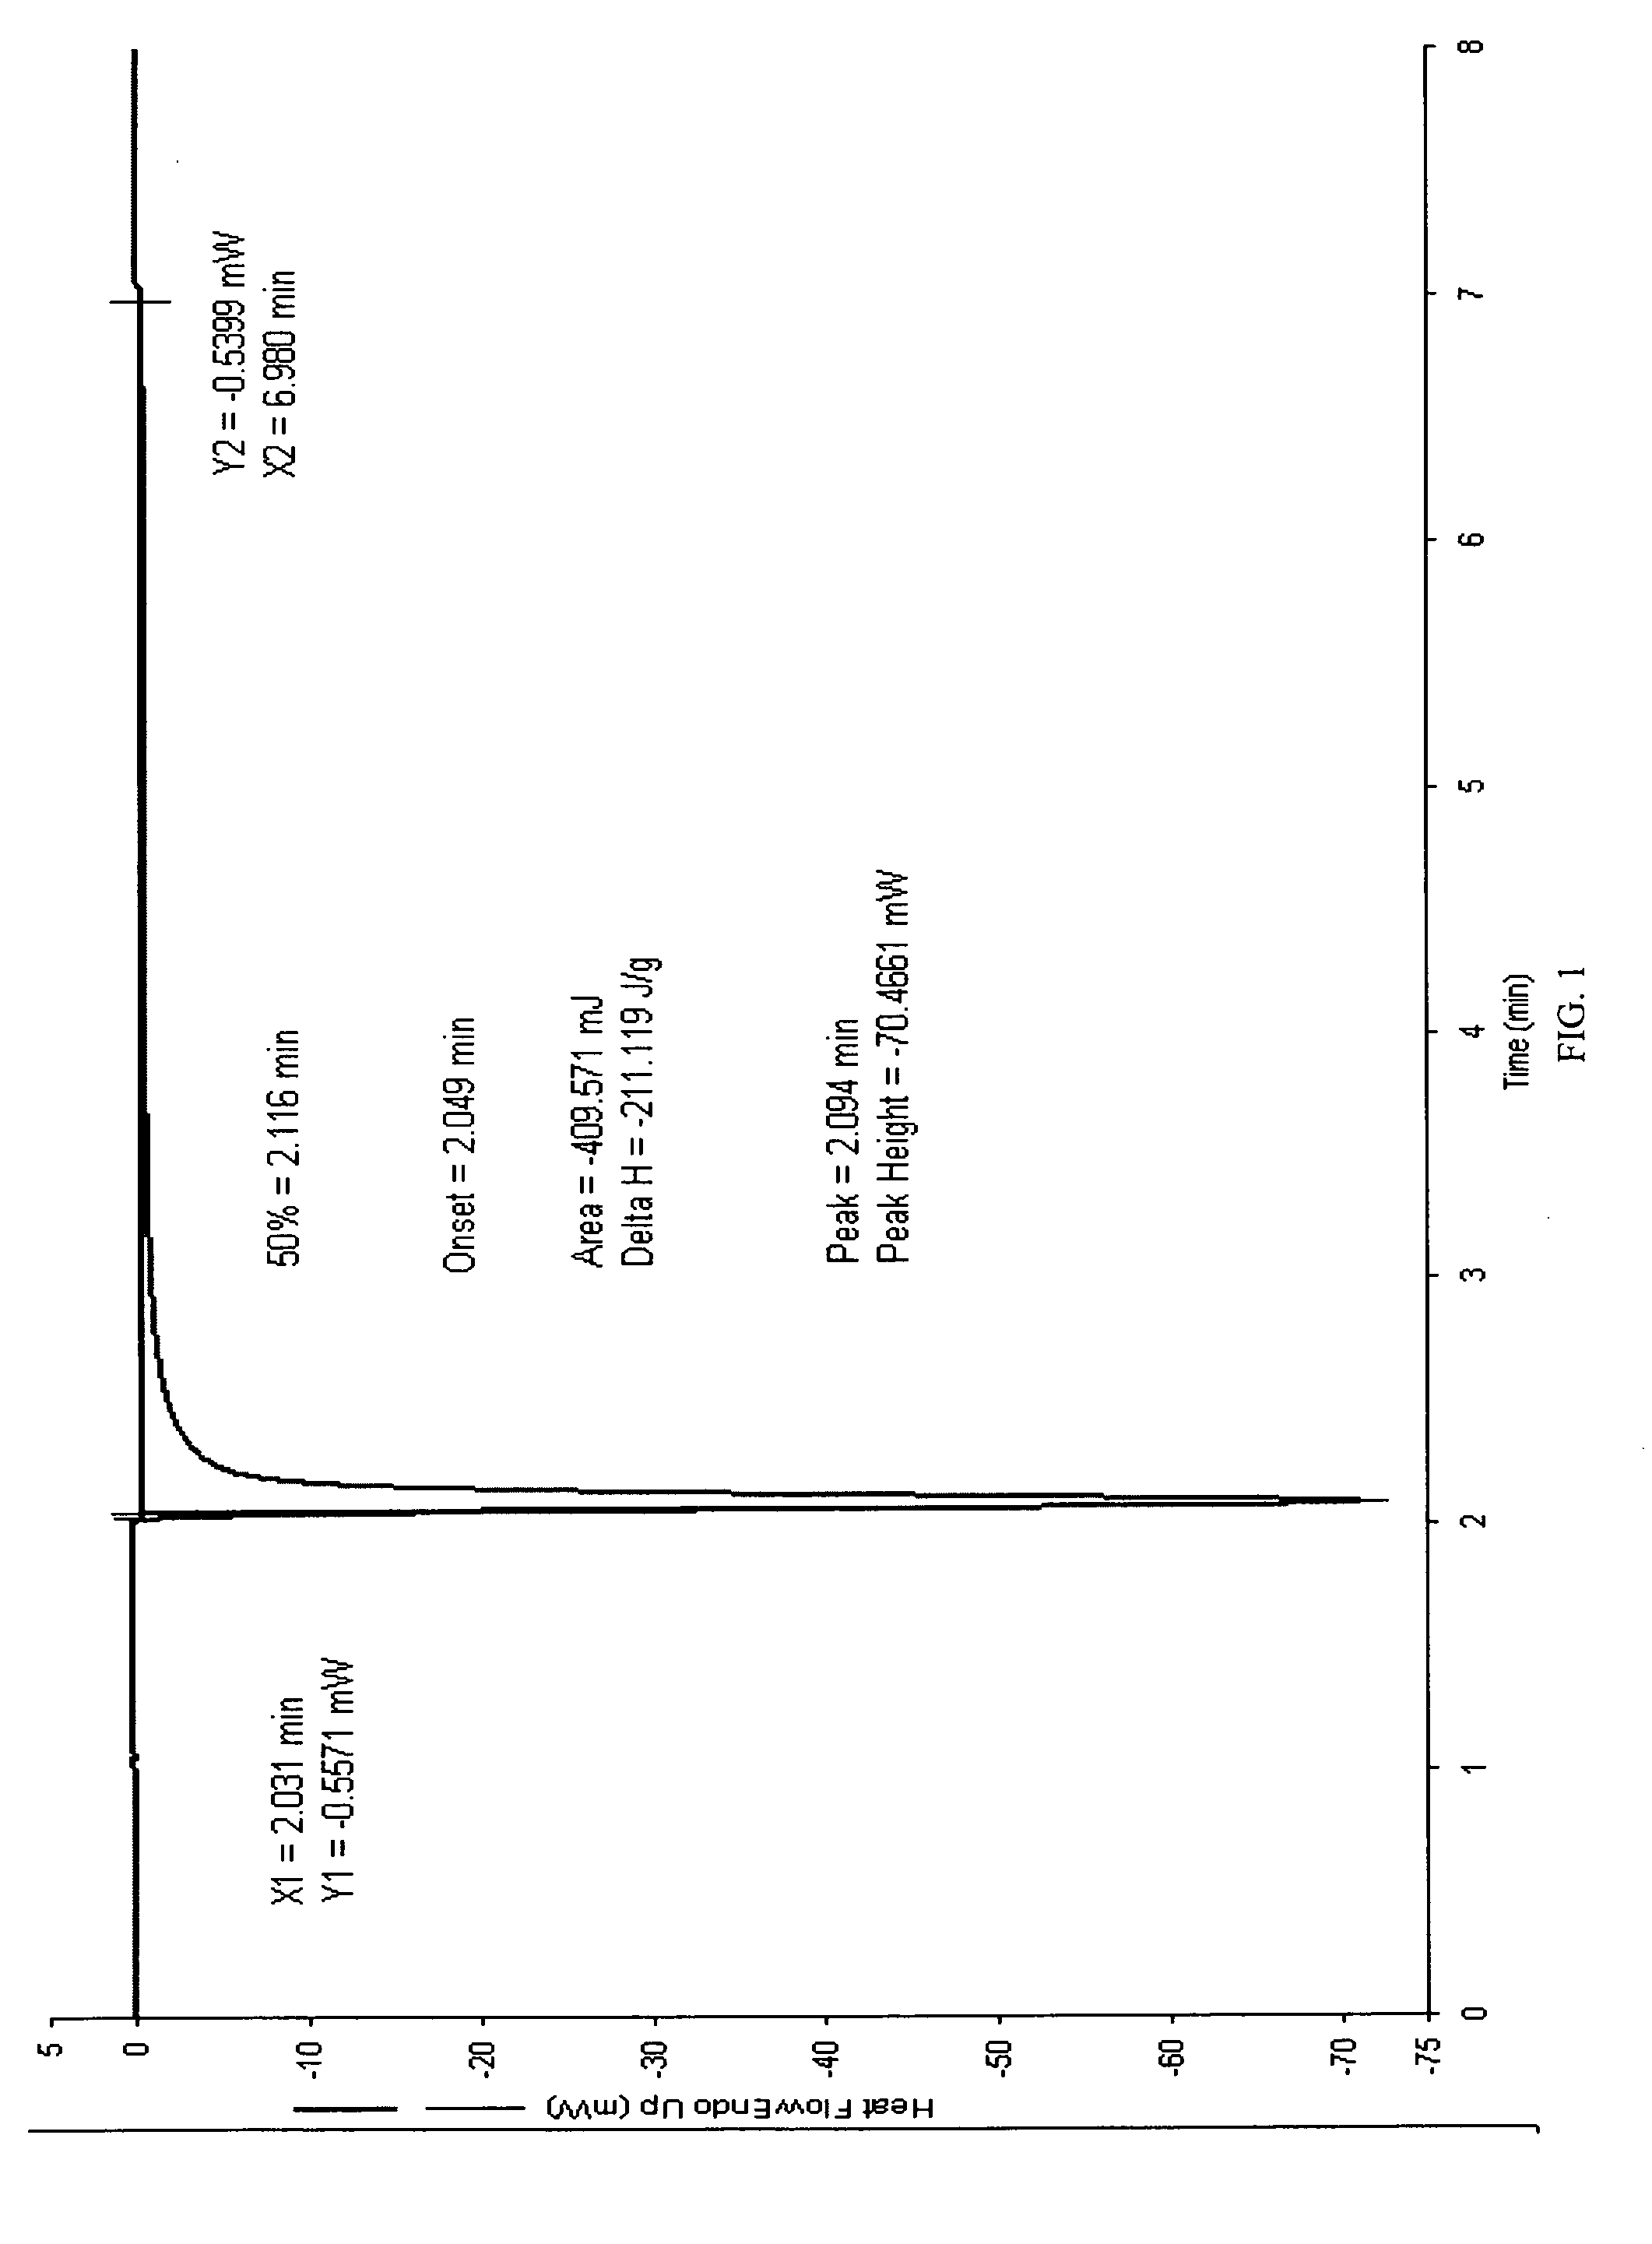 Fluoroarylsulfonium photoacid generators